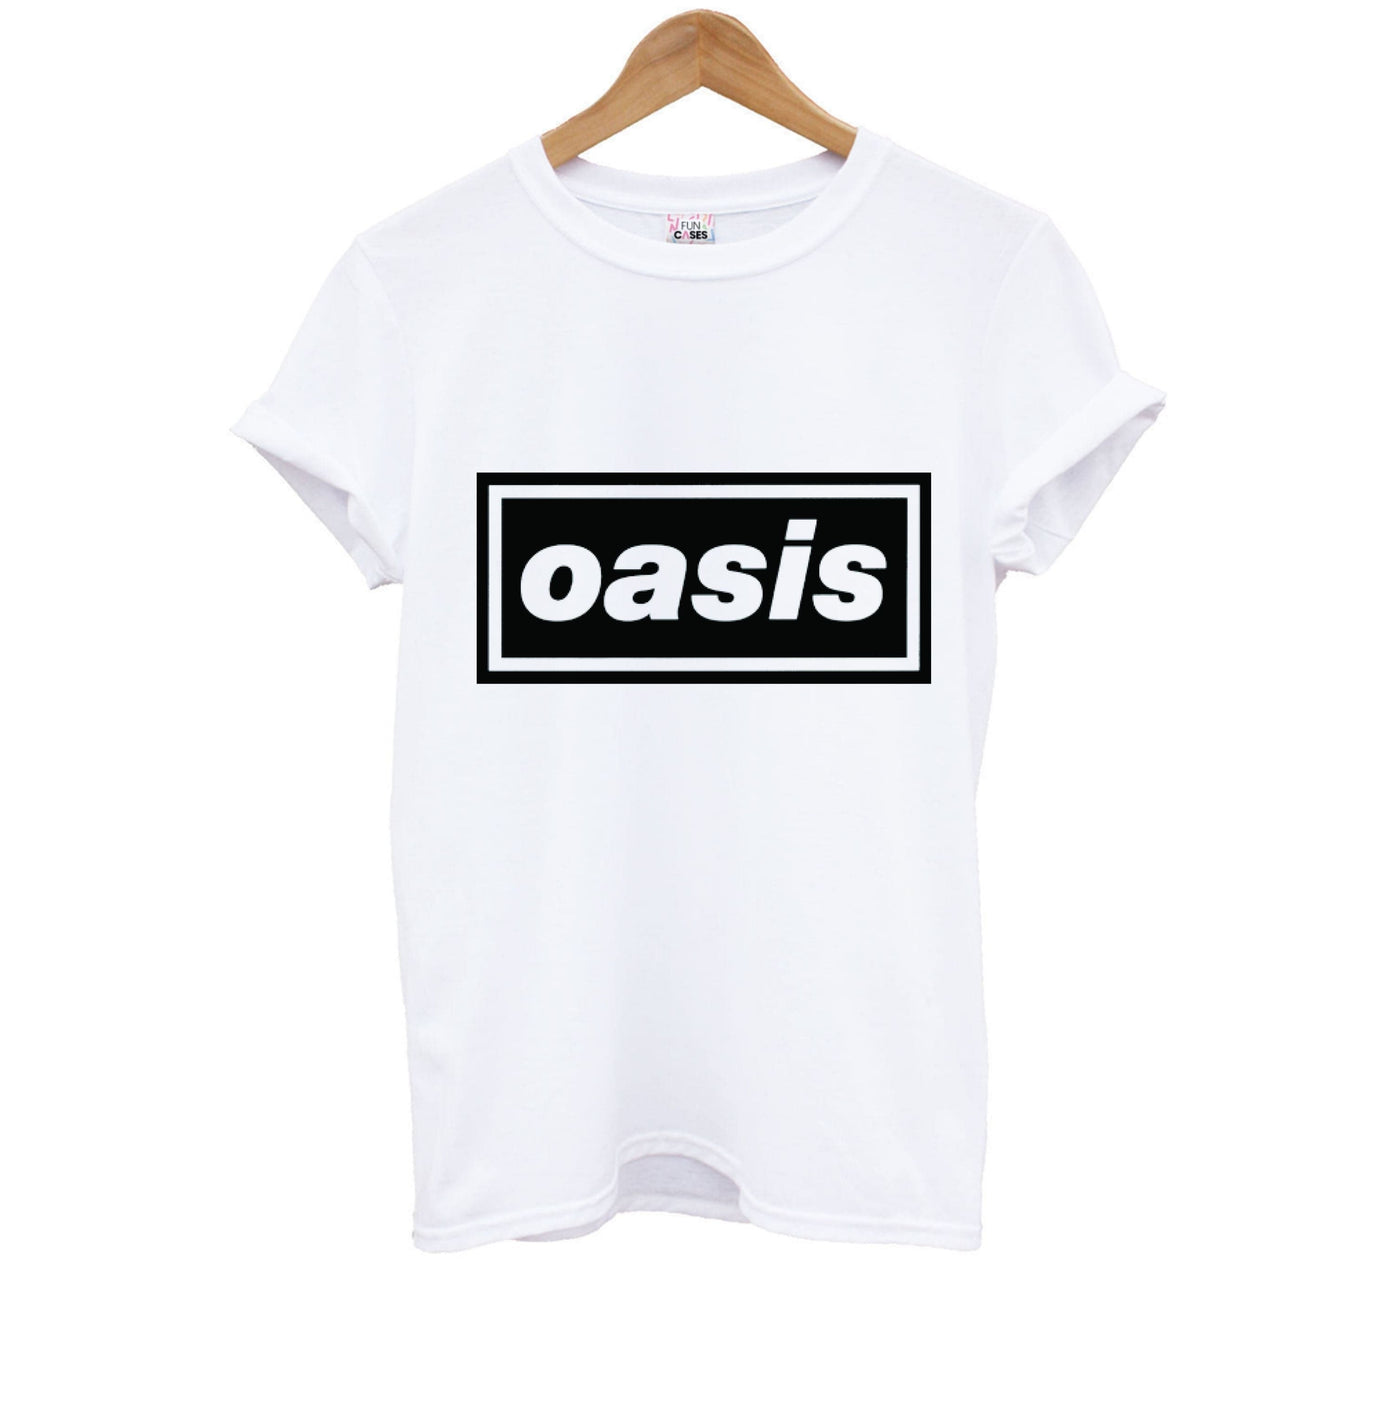 Band Name Green - Oasis Kids T-Shirt